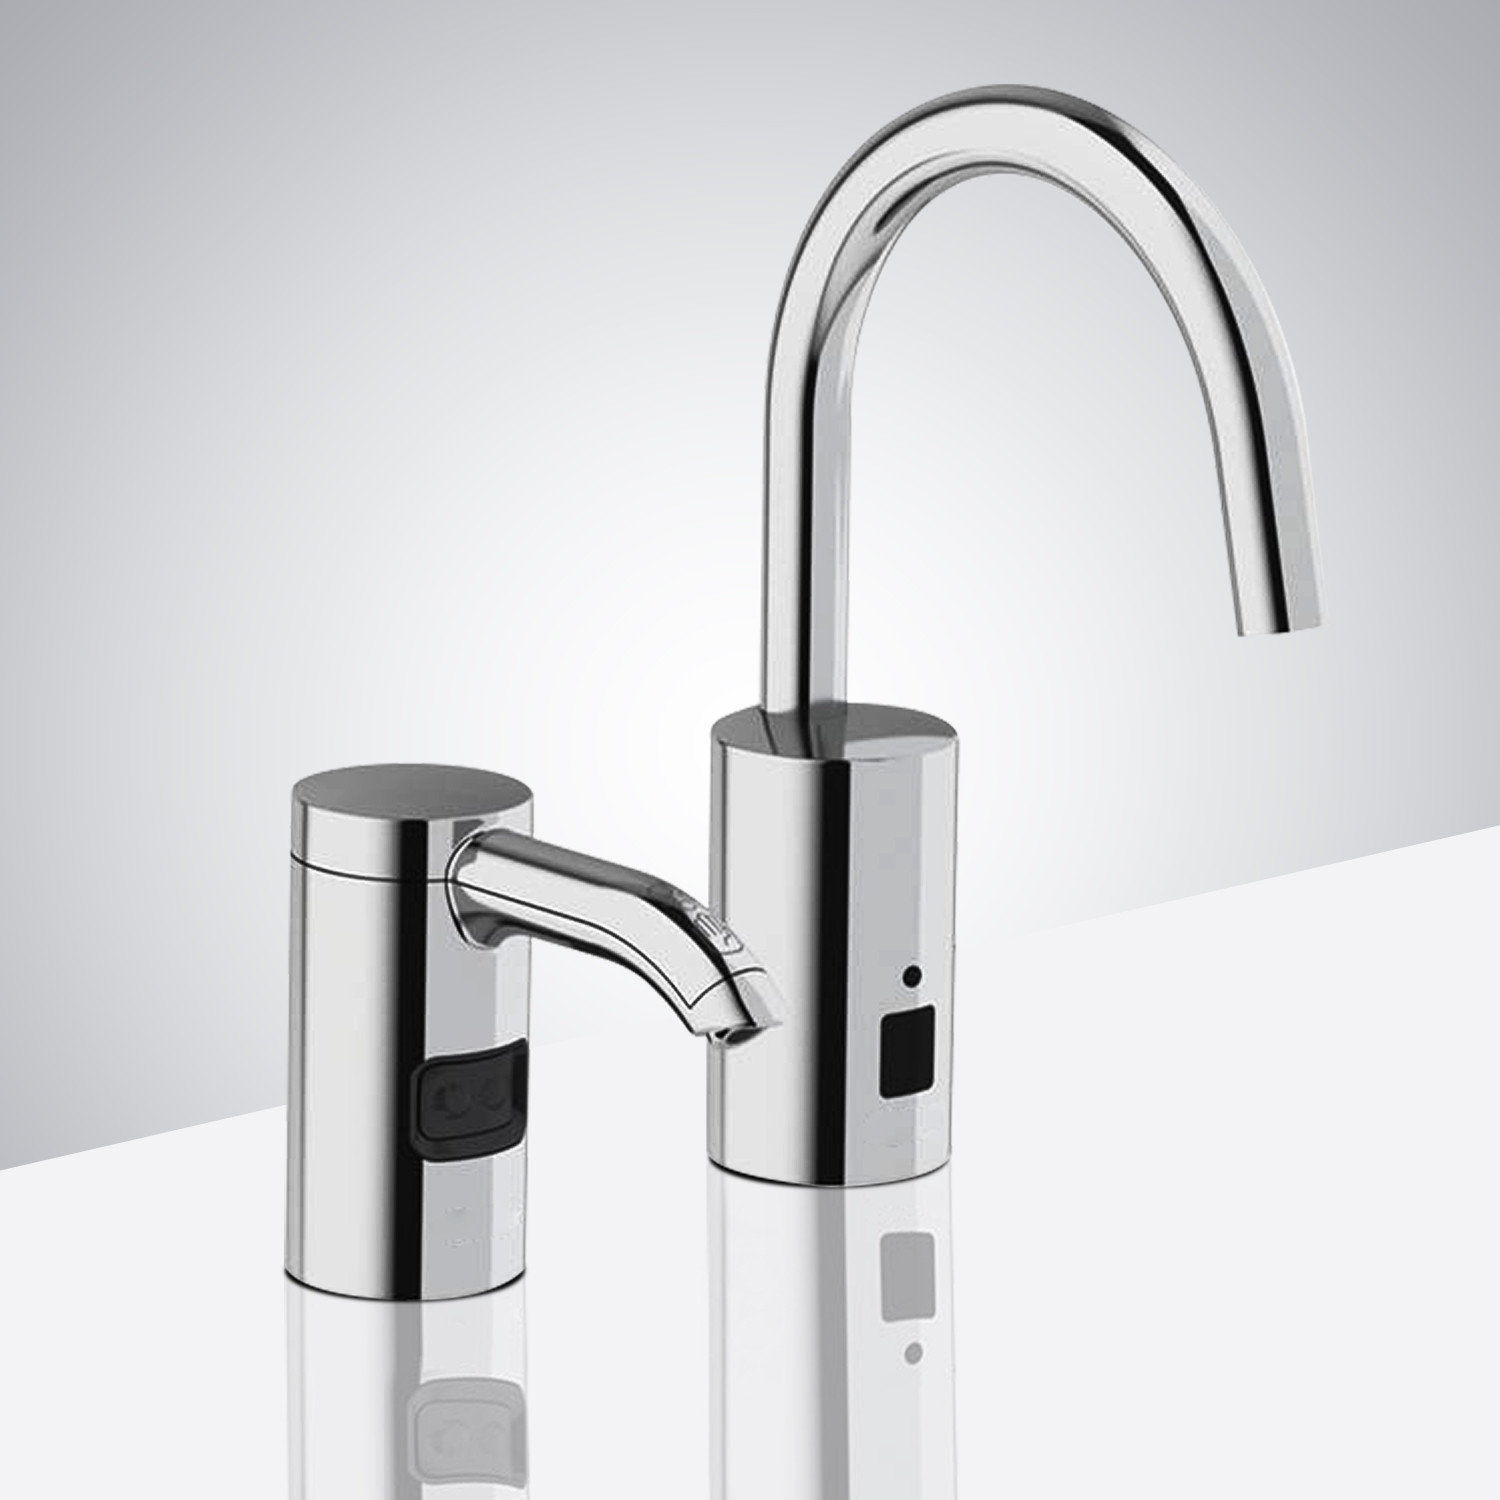 Fontana Cholet Gooseneck Commercial Touchless Motion Sensor Faucet & Automatic Deck Mount Soap Dispenser for Restrooms in Chrome